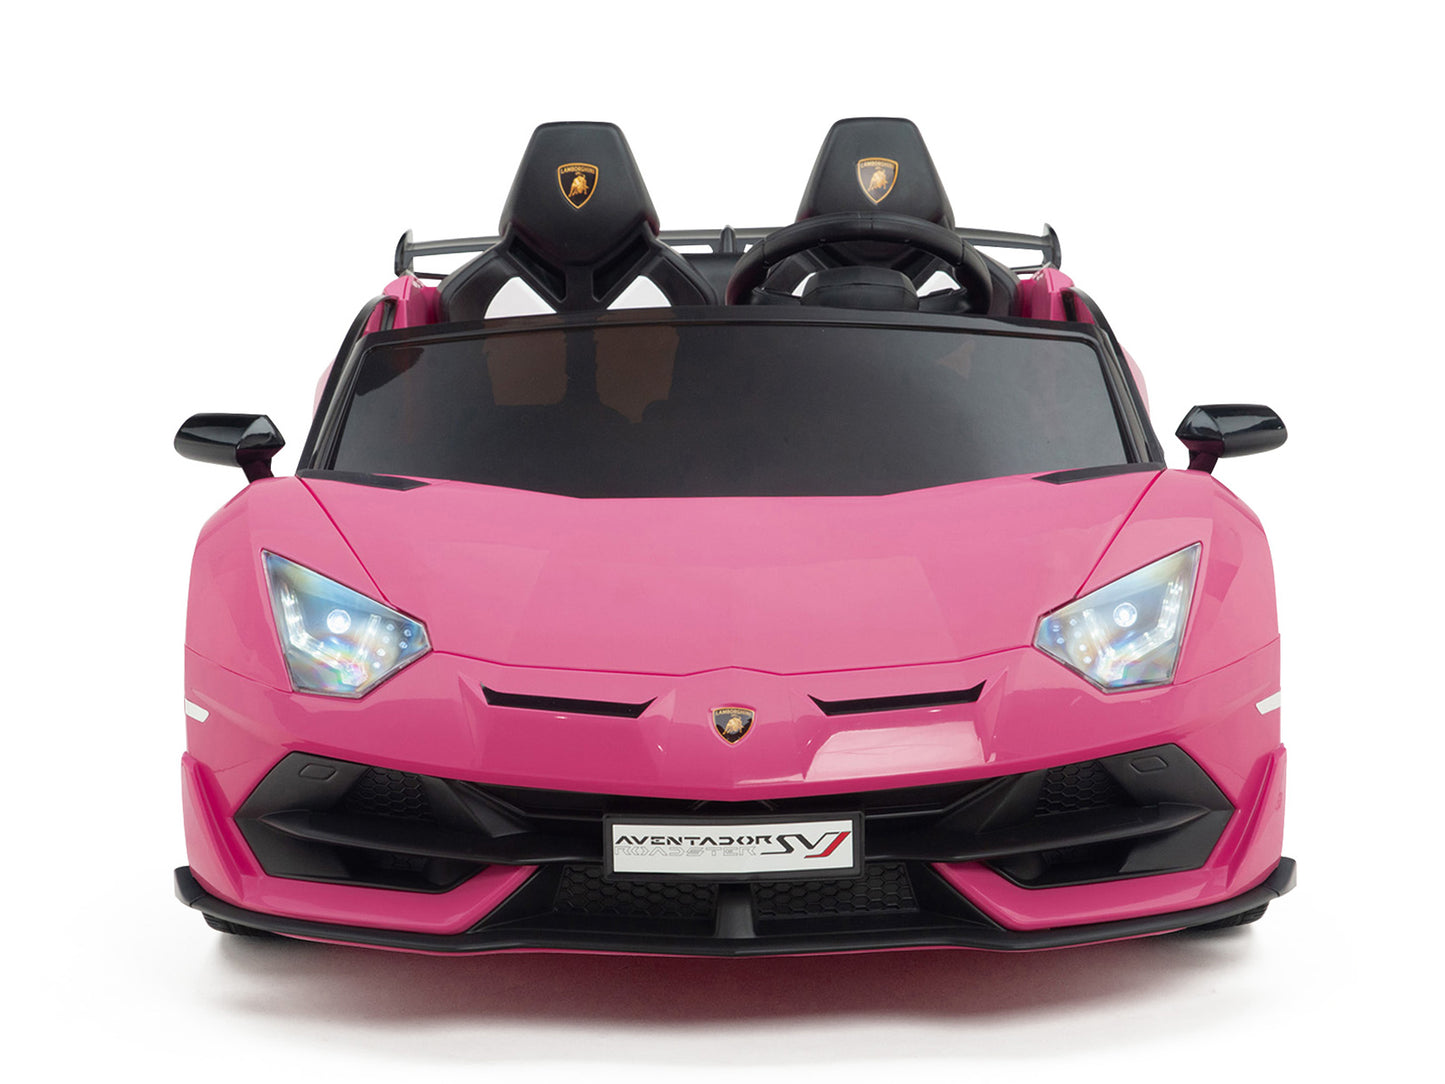 24V Lamborghini SVJ Ride On DRIFT Car with Remote Control - Pink